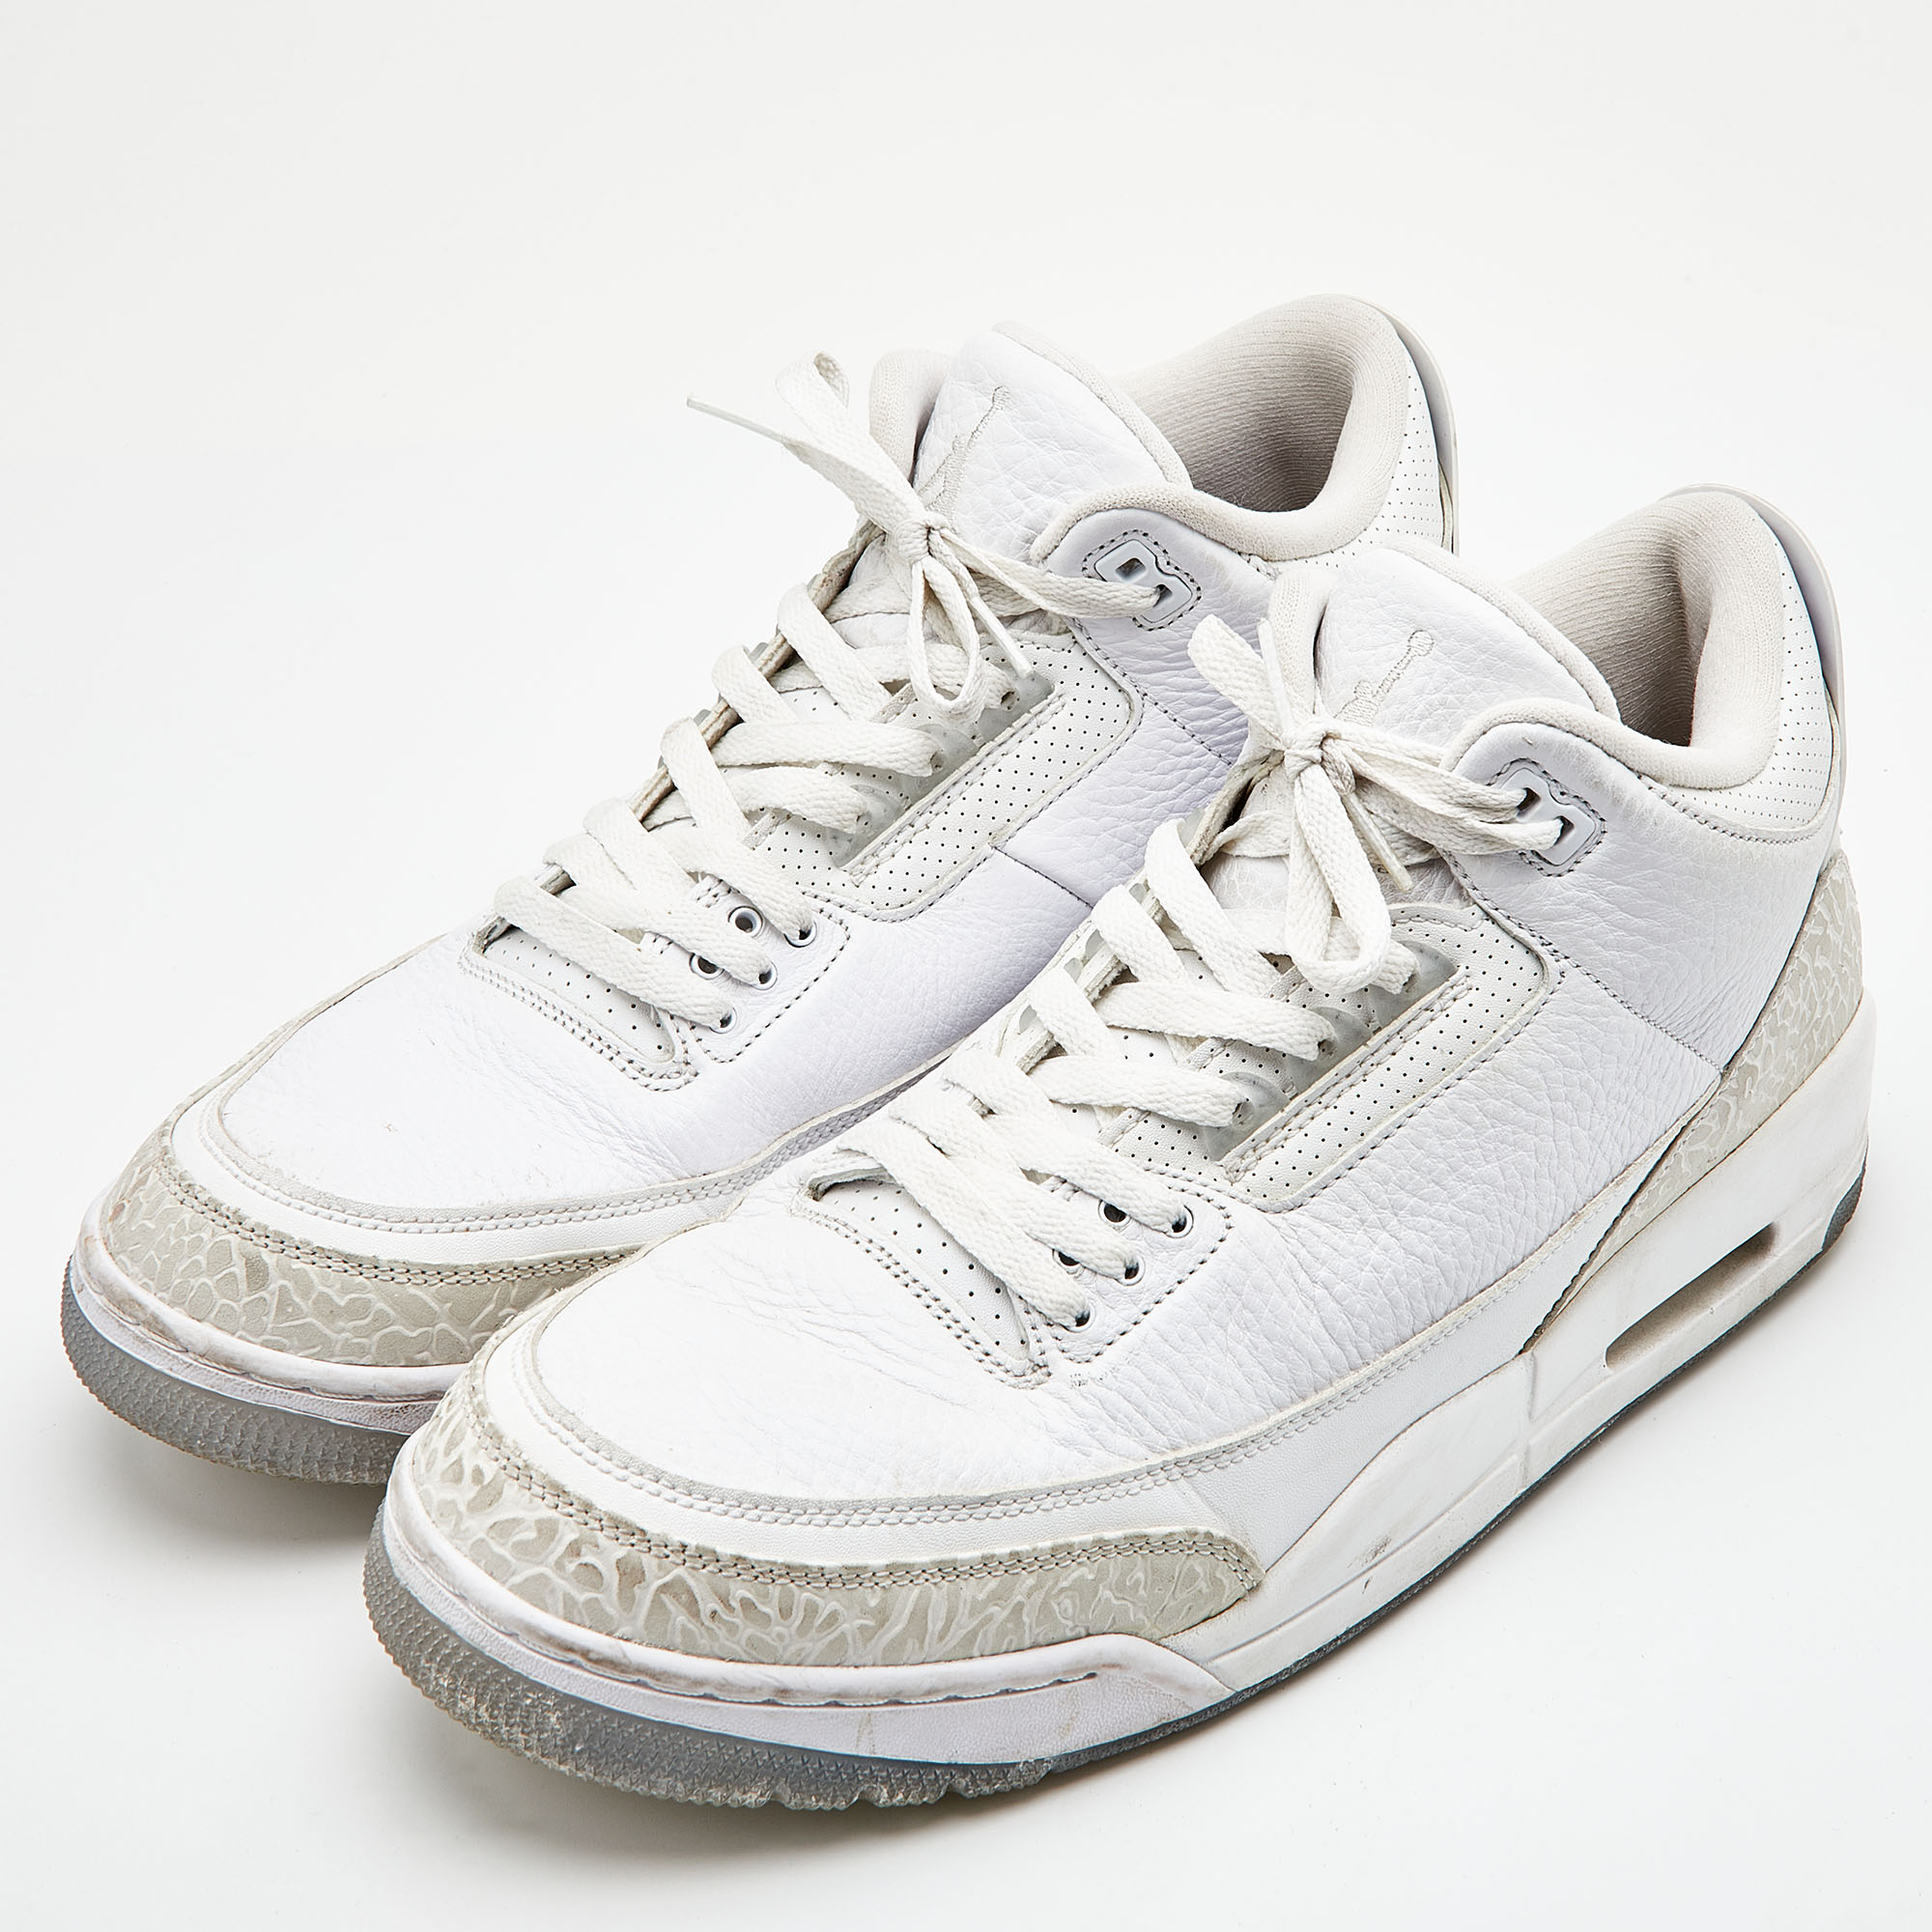 

Air Jordans White Leather Jordan 3 Retro High Top Sneakers Size